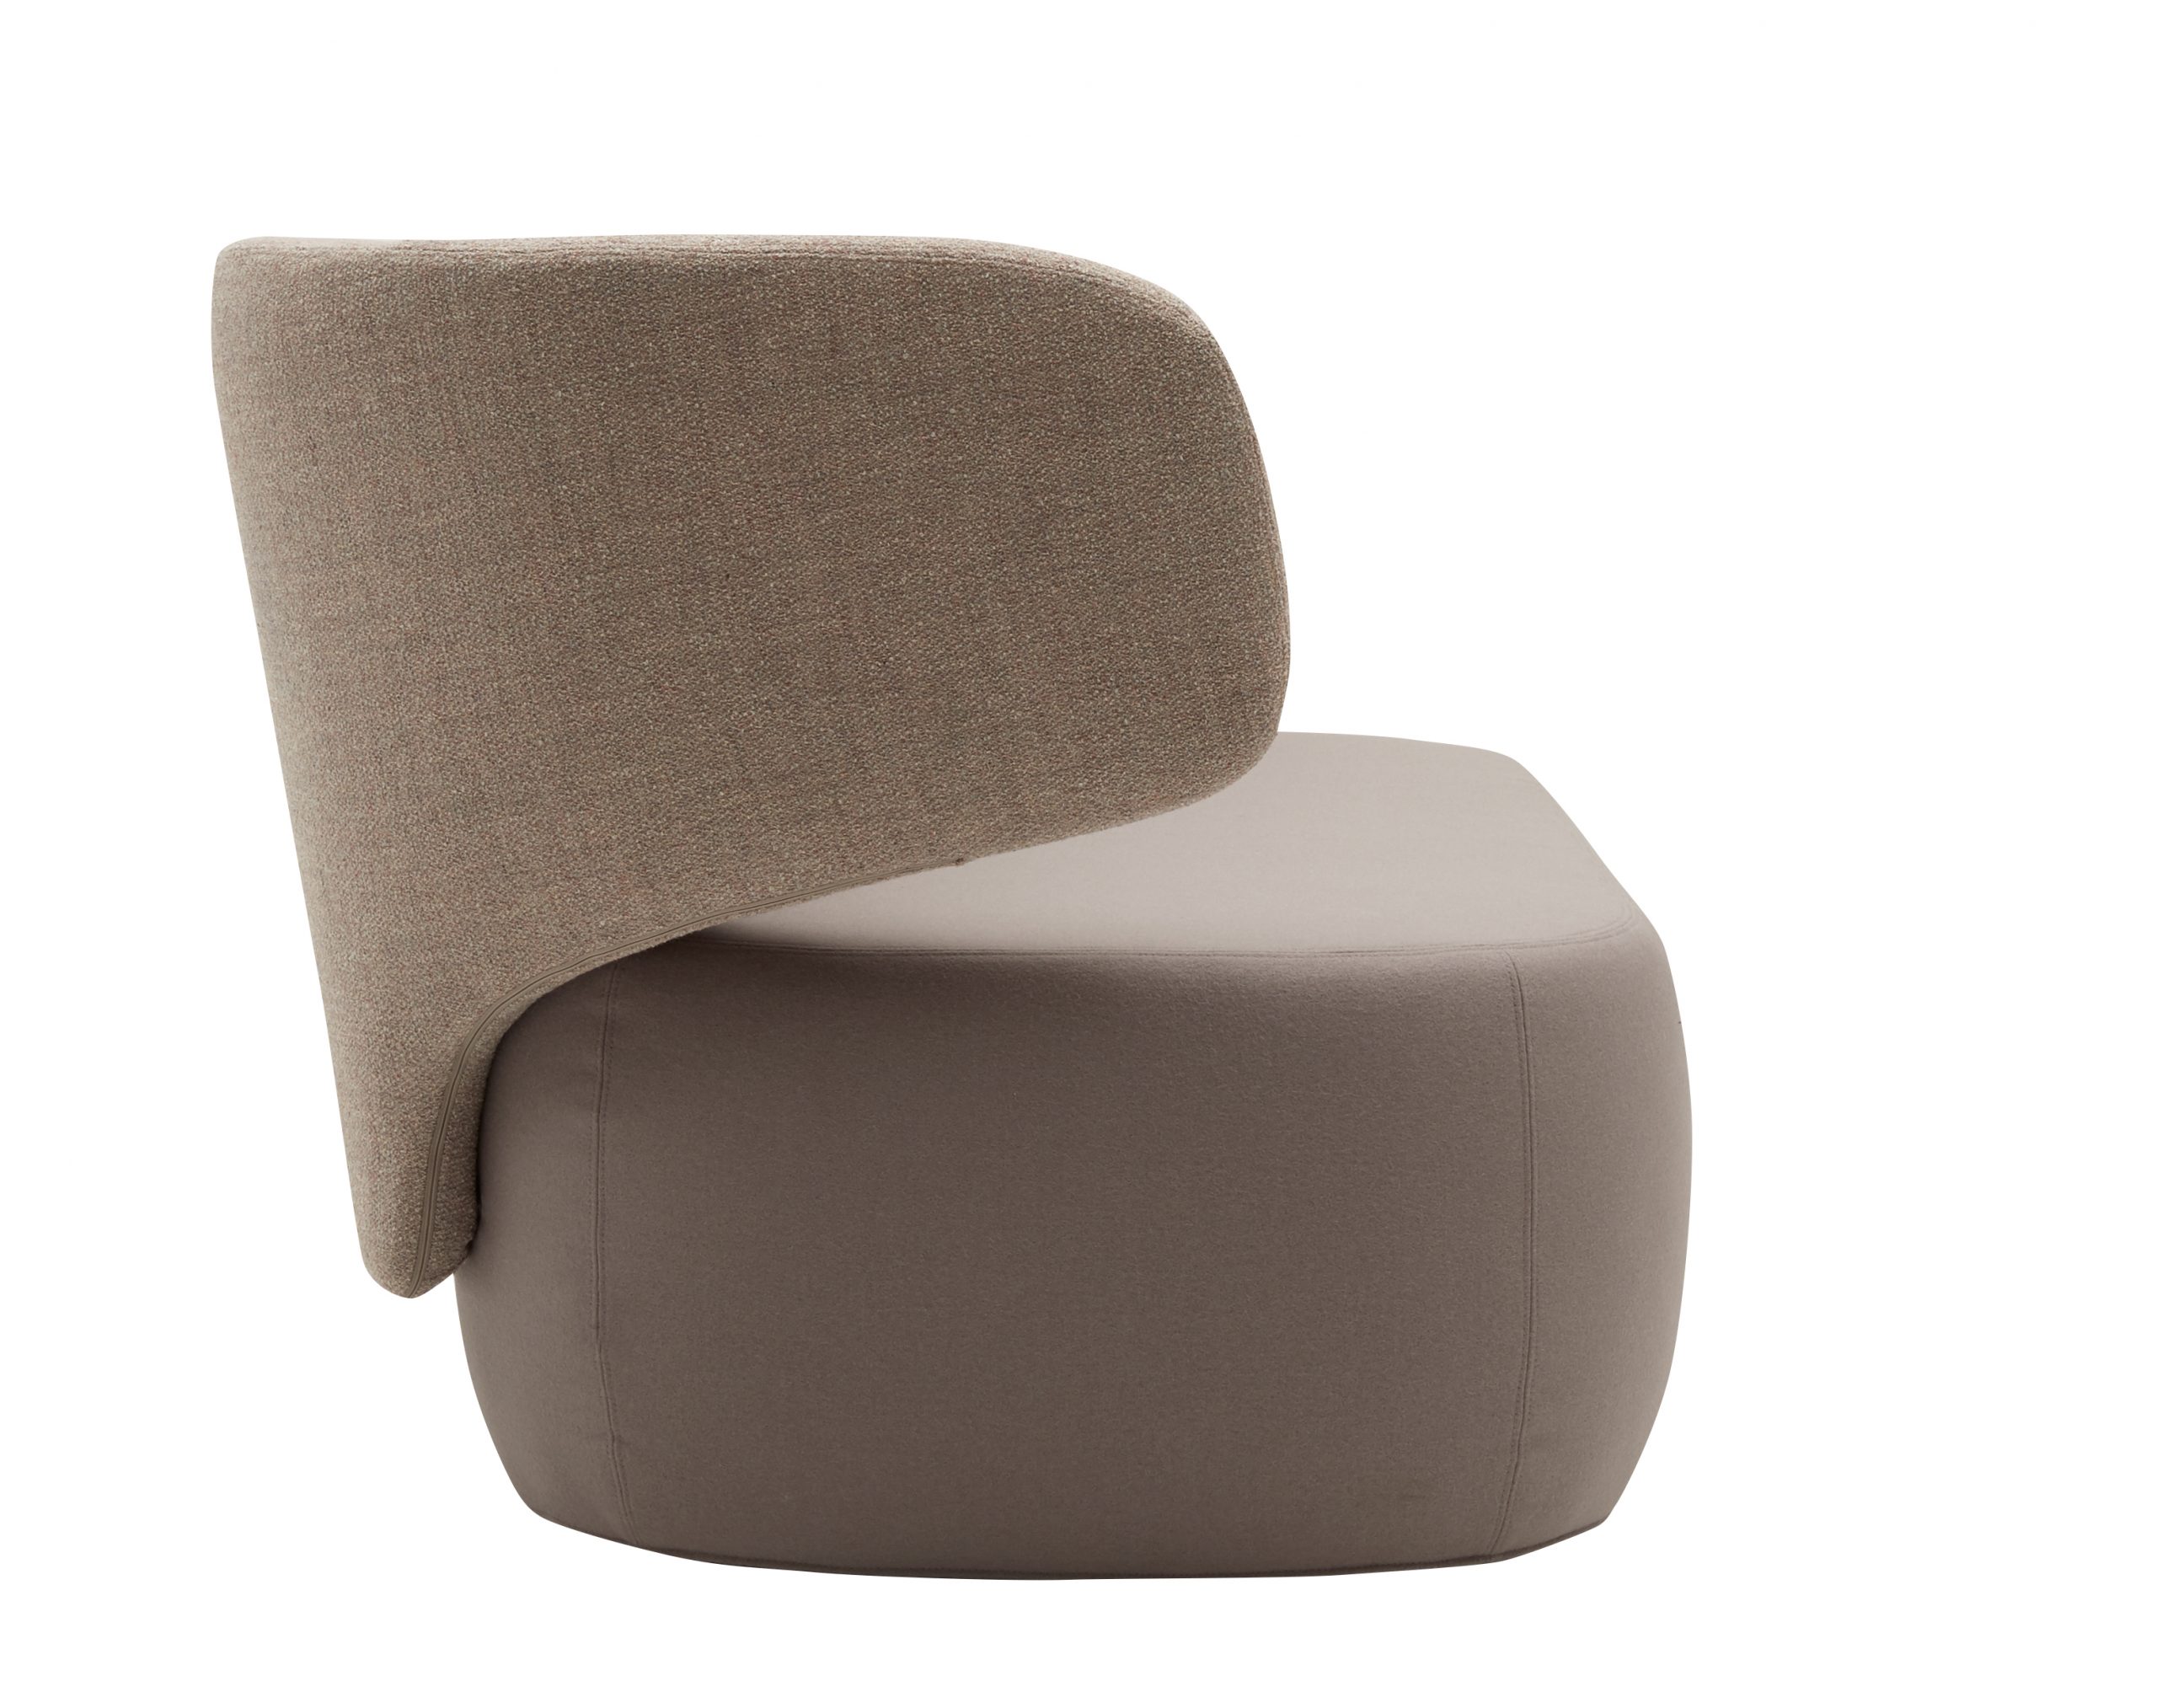 basel-sofa-chair-high-res-19-scaled.jpg